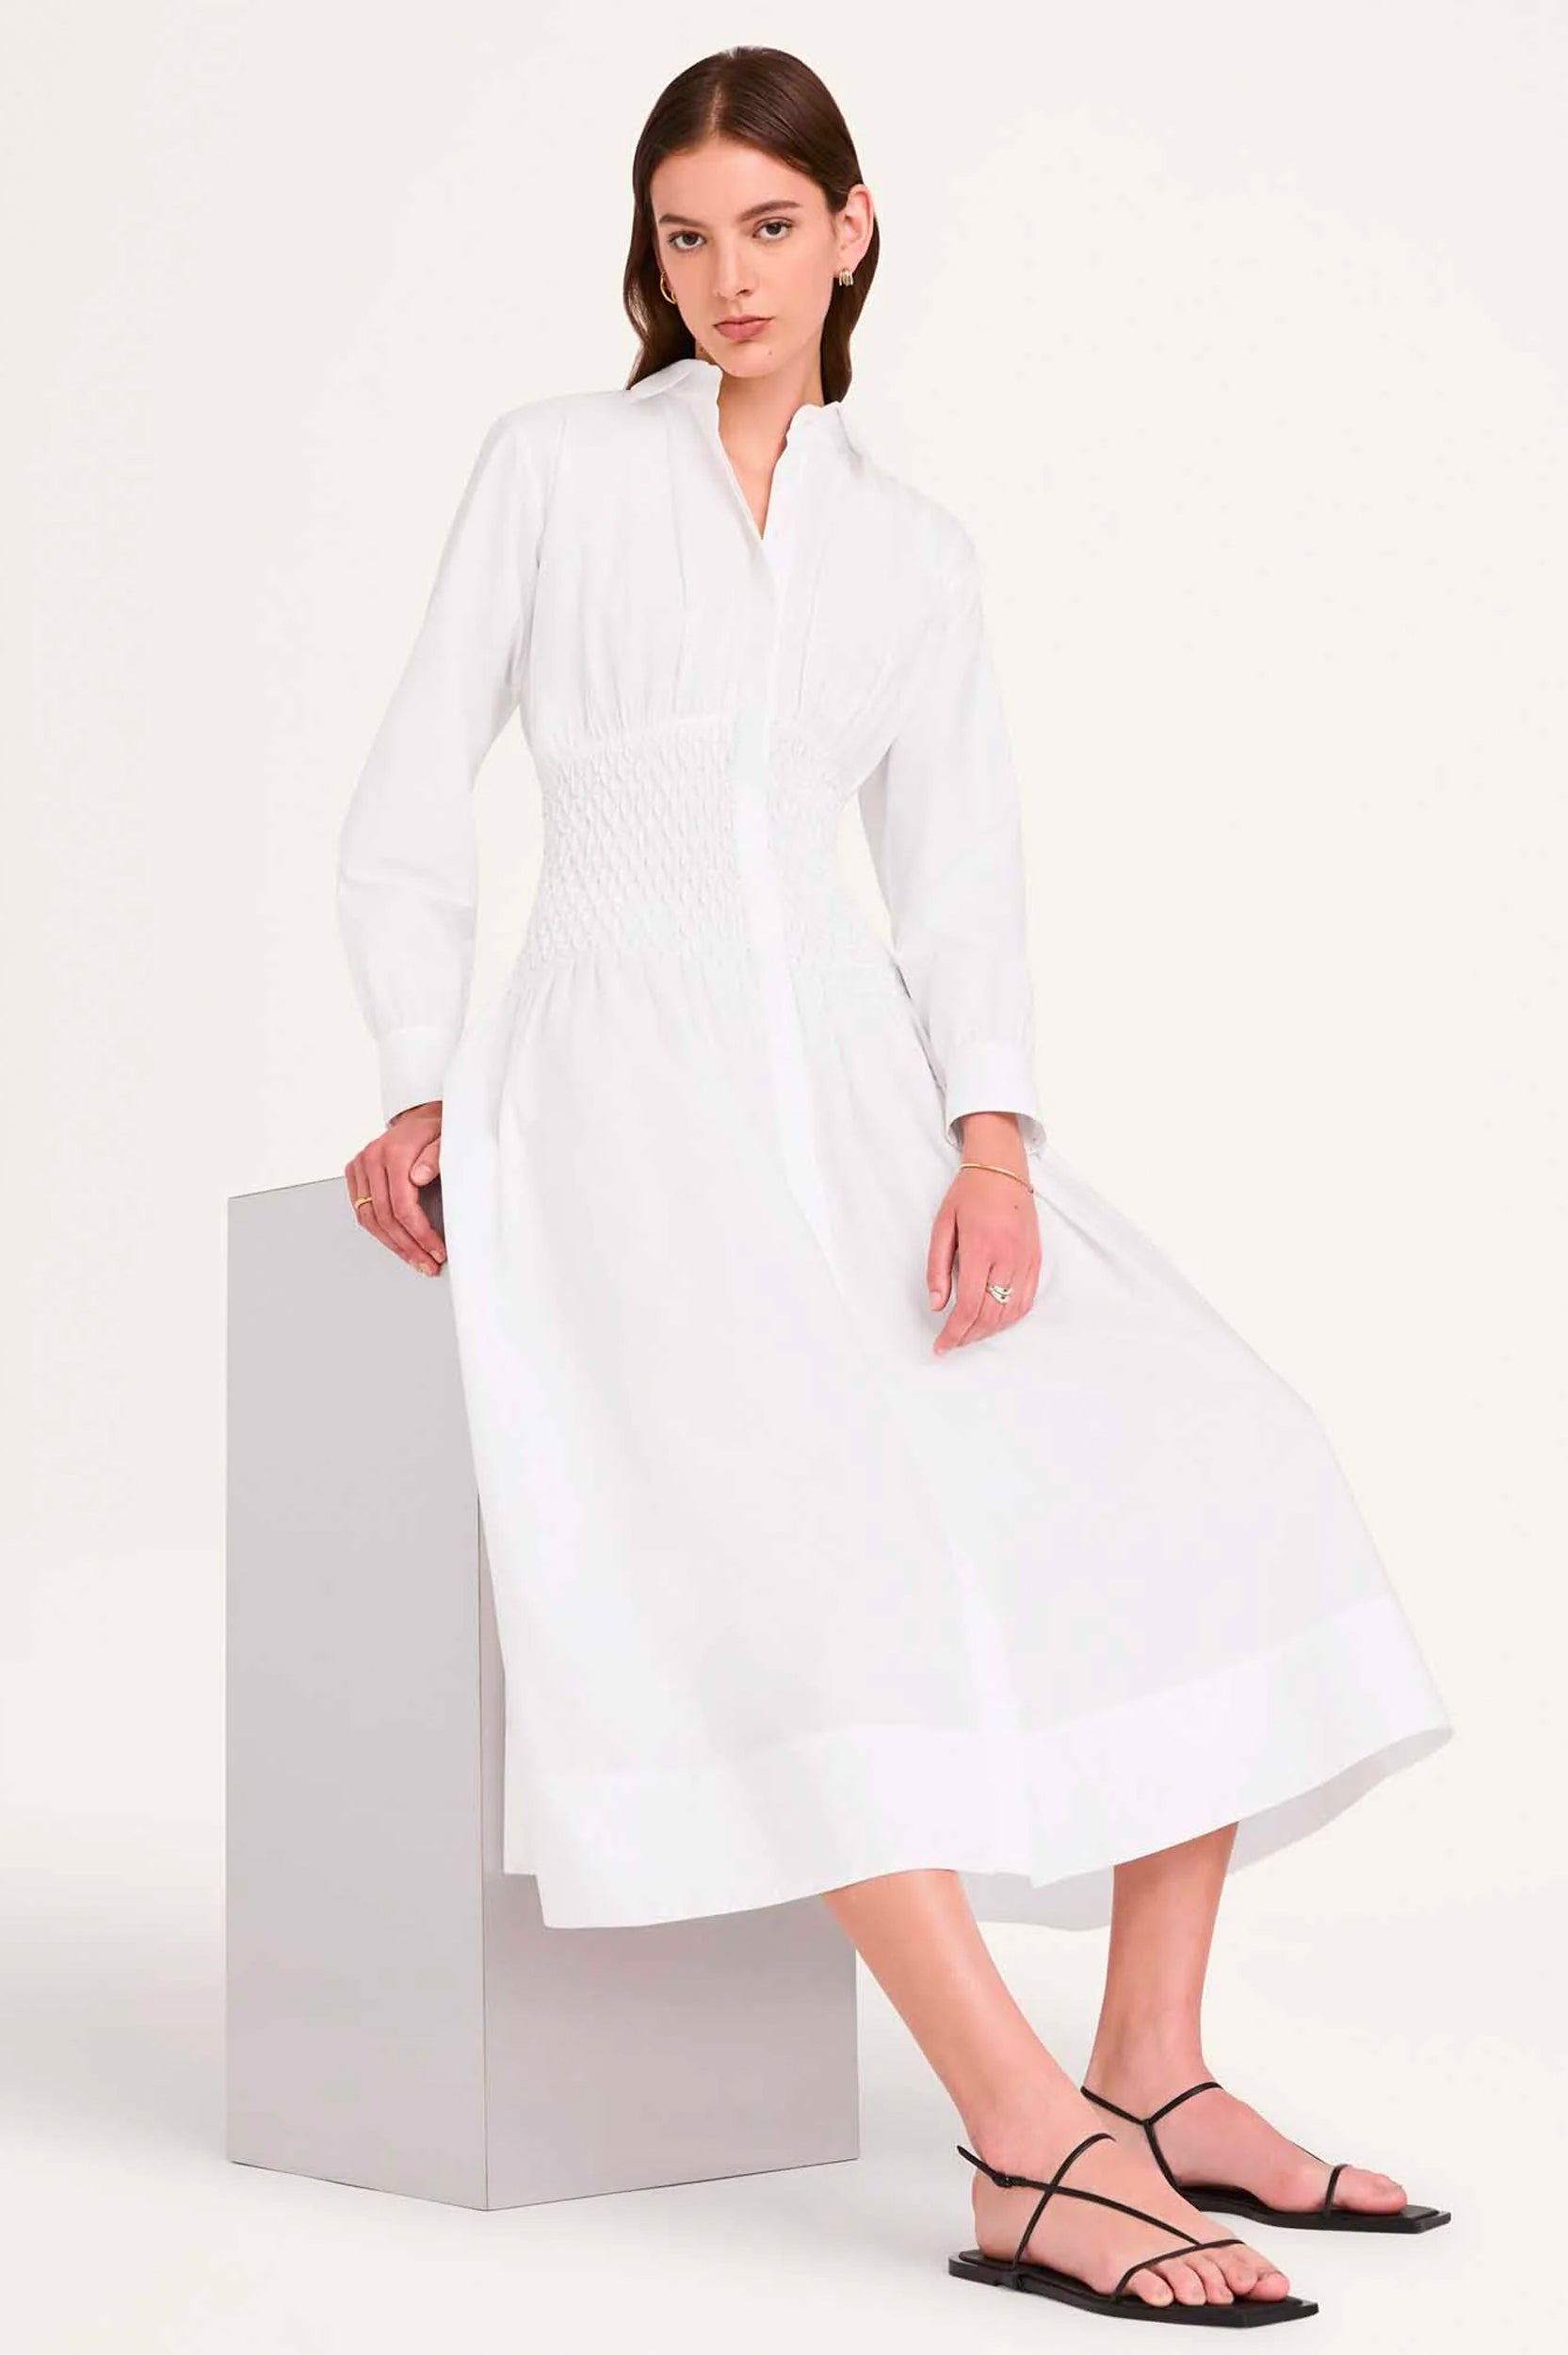 Jordan Honeycomb Dress in White